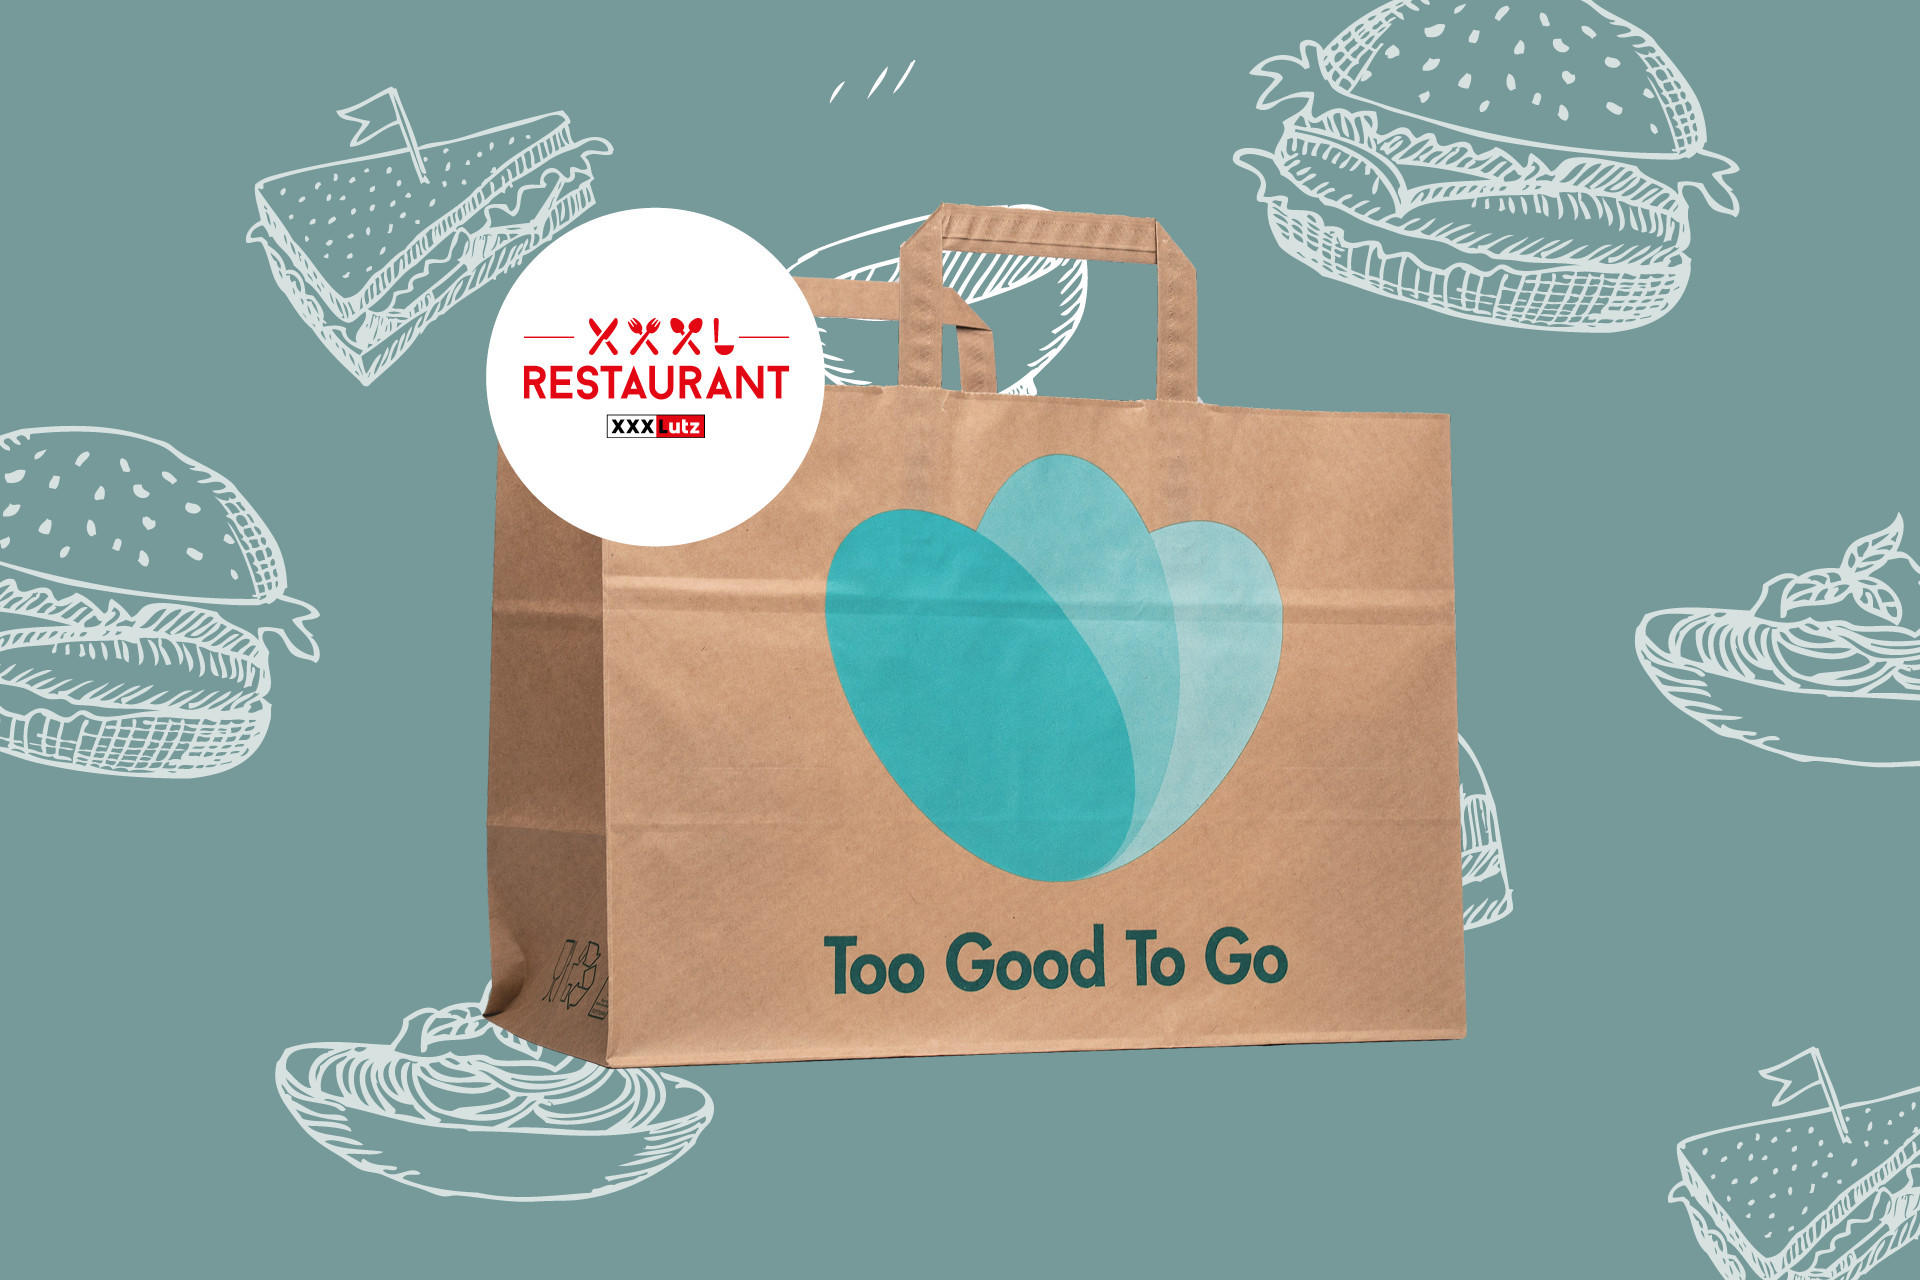 xxxlutz-Restaurant-too-good-to-go.png